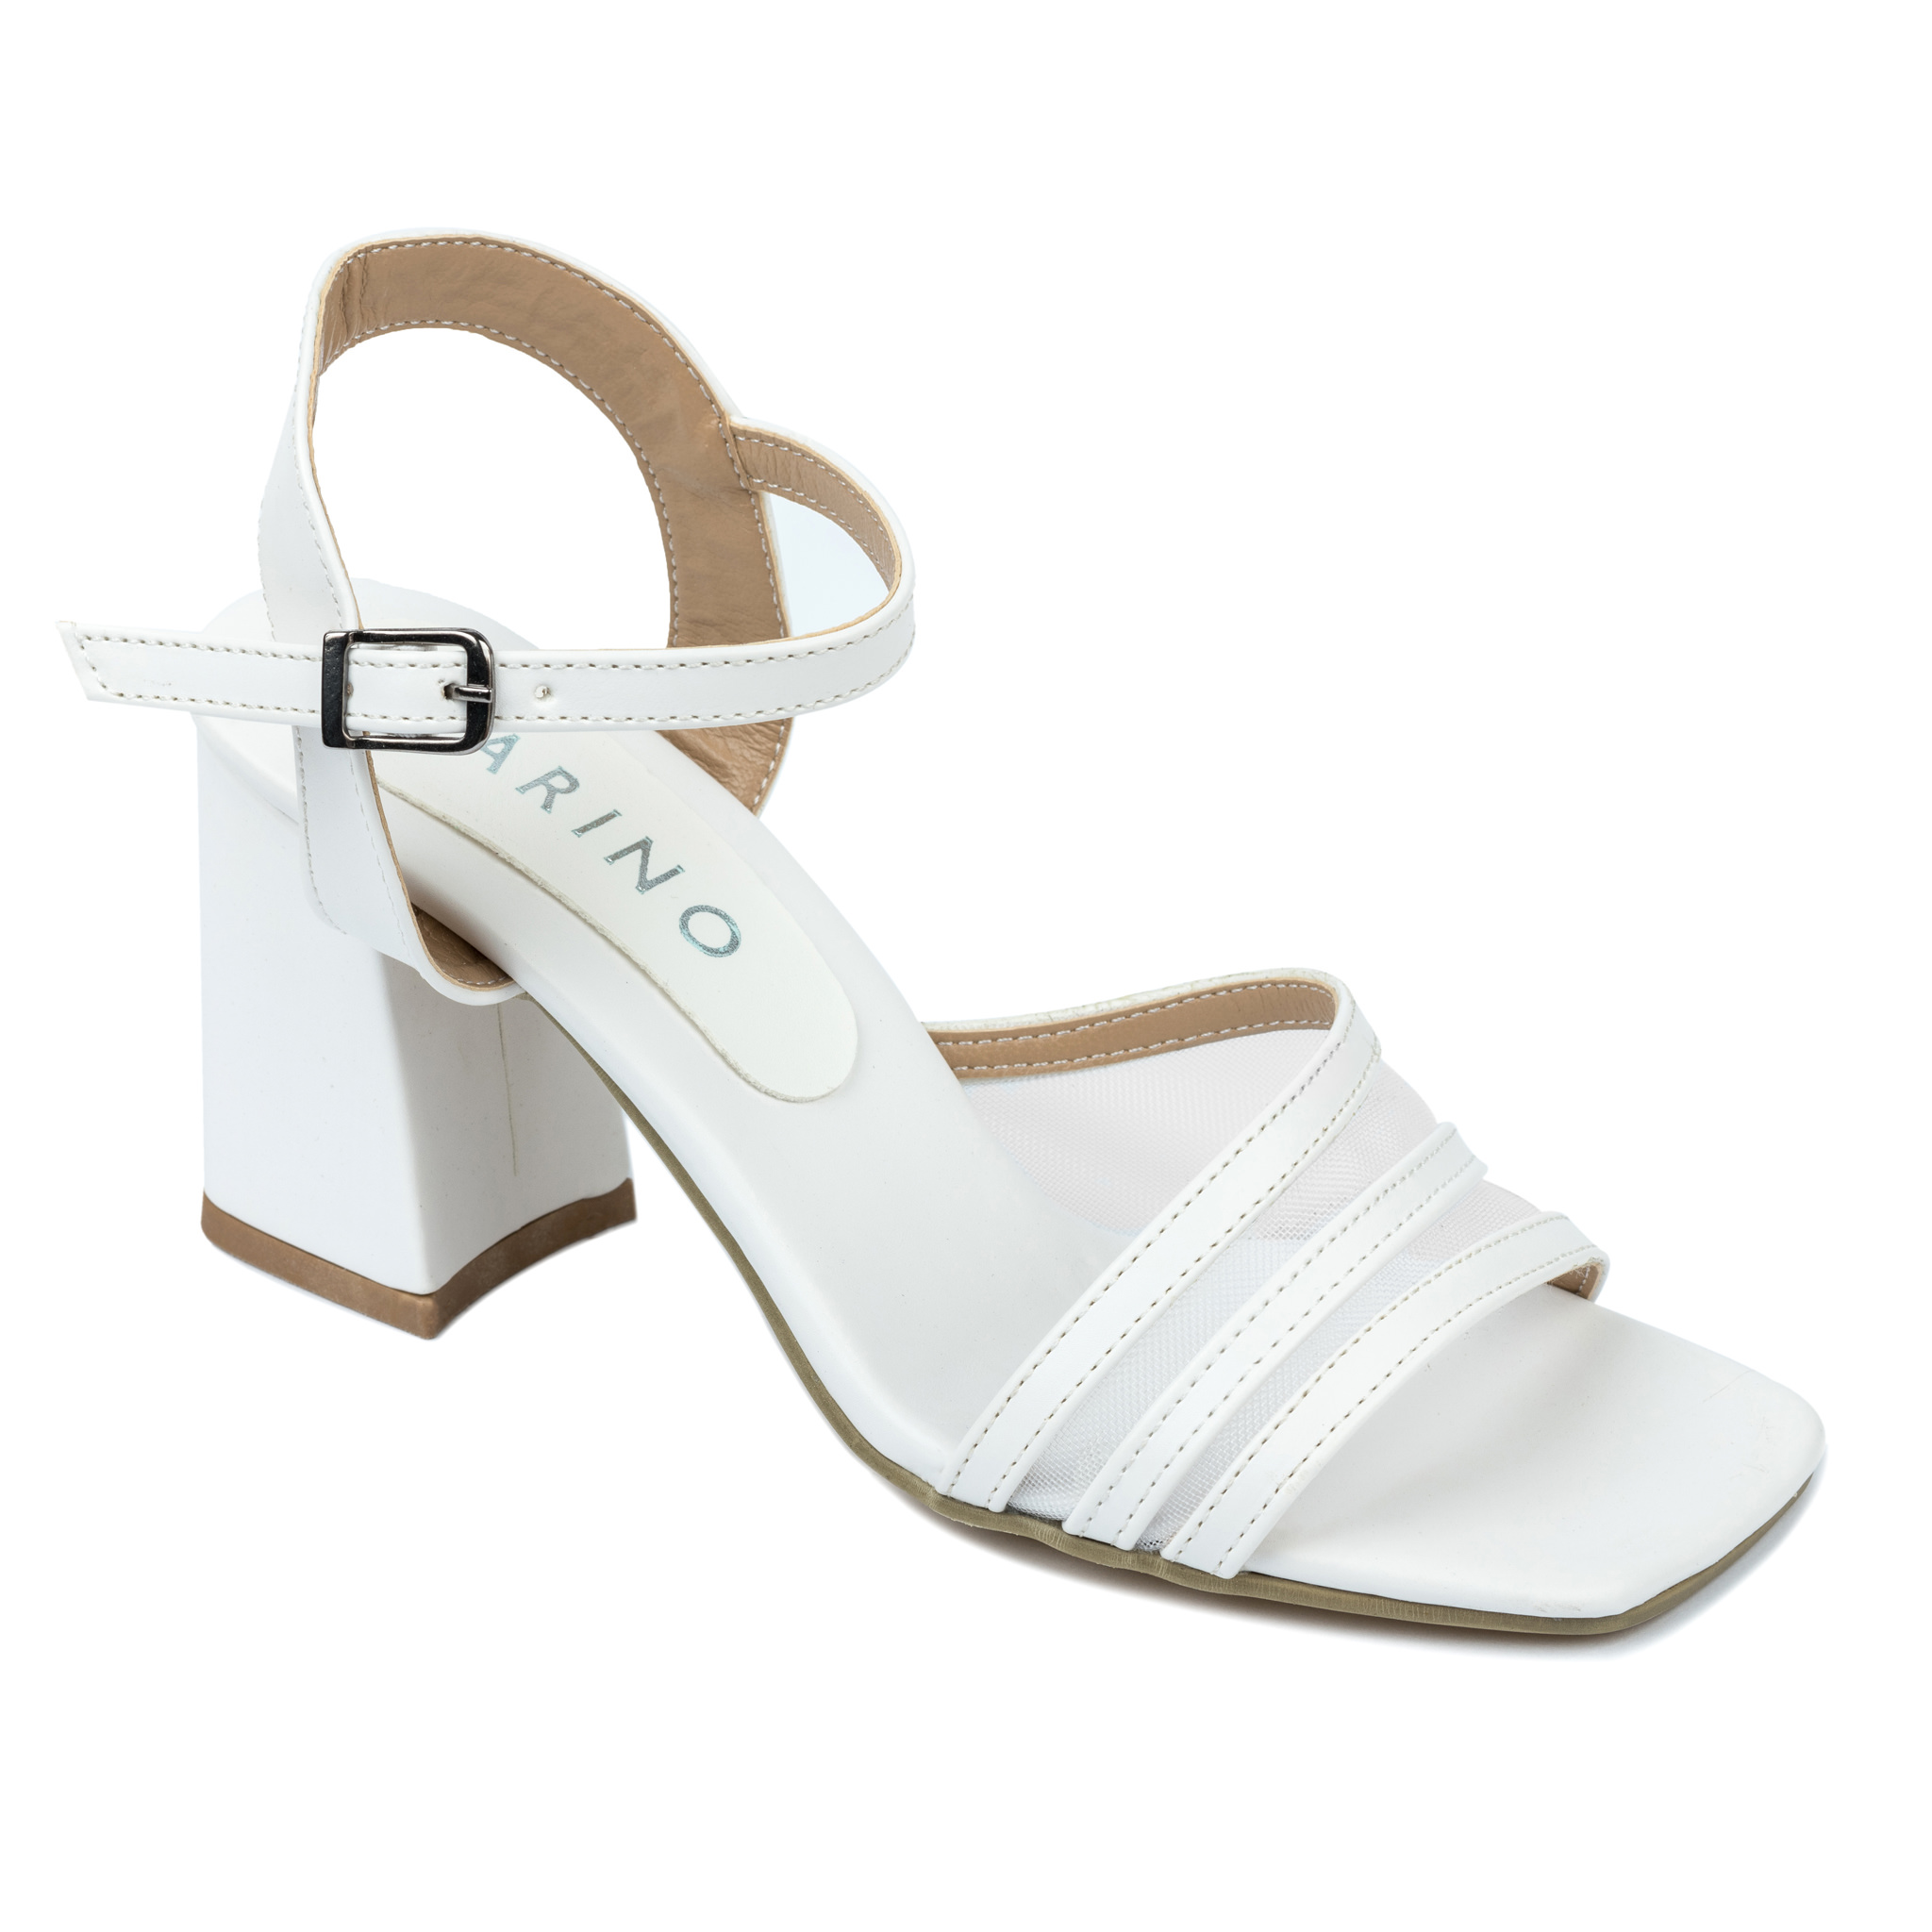 Women sandals A463 - WHITE